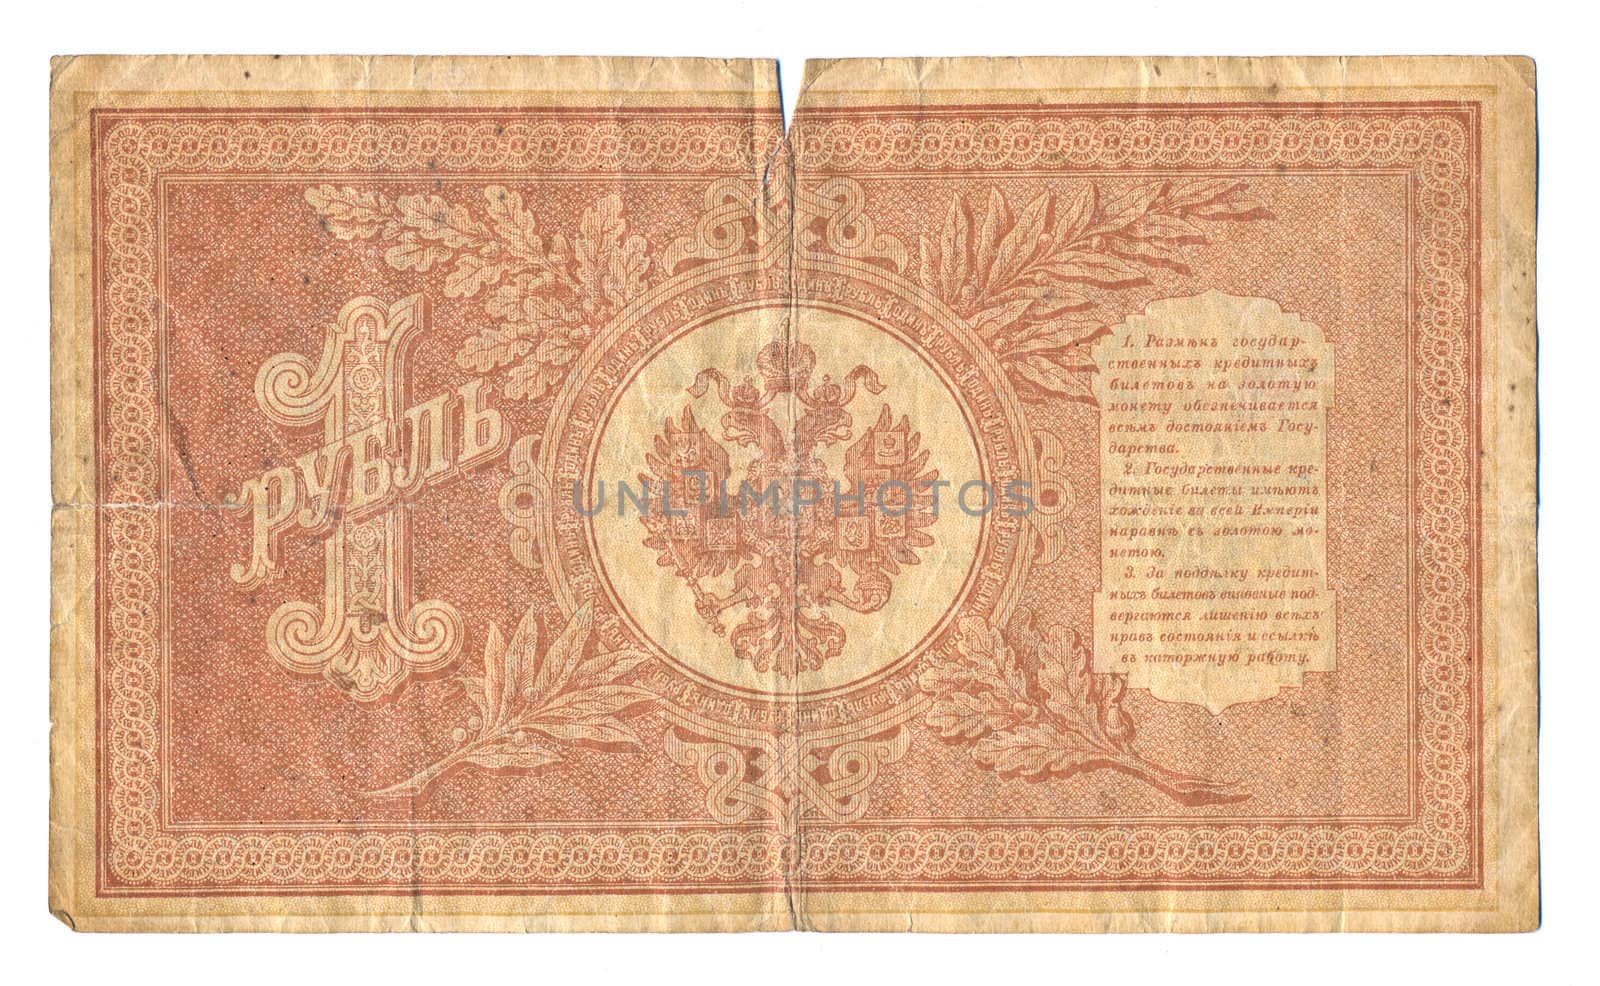 Face sheet of an old denomination by eglazov